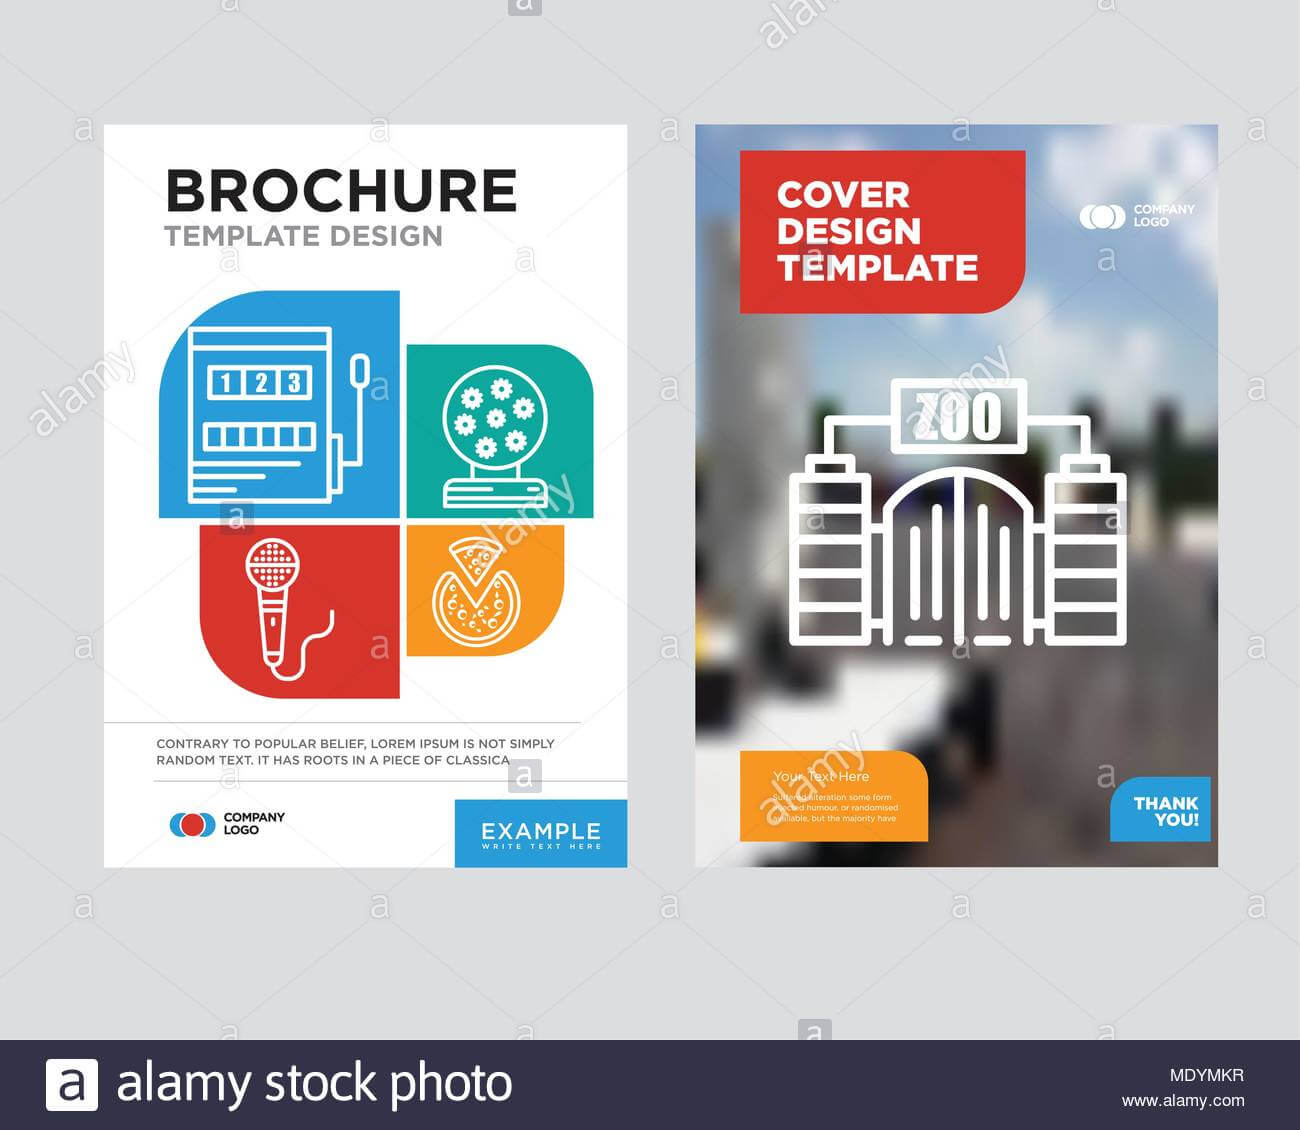 Zoo Brochure Flyer Design Template With Abstract Photo Regarding Zoo Brochure Template